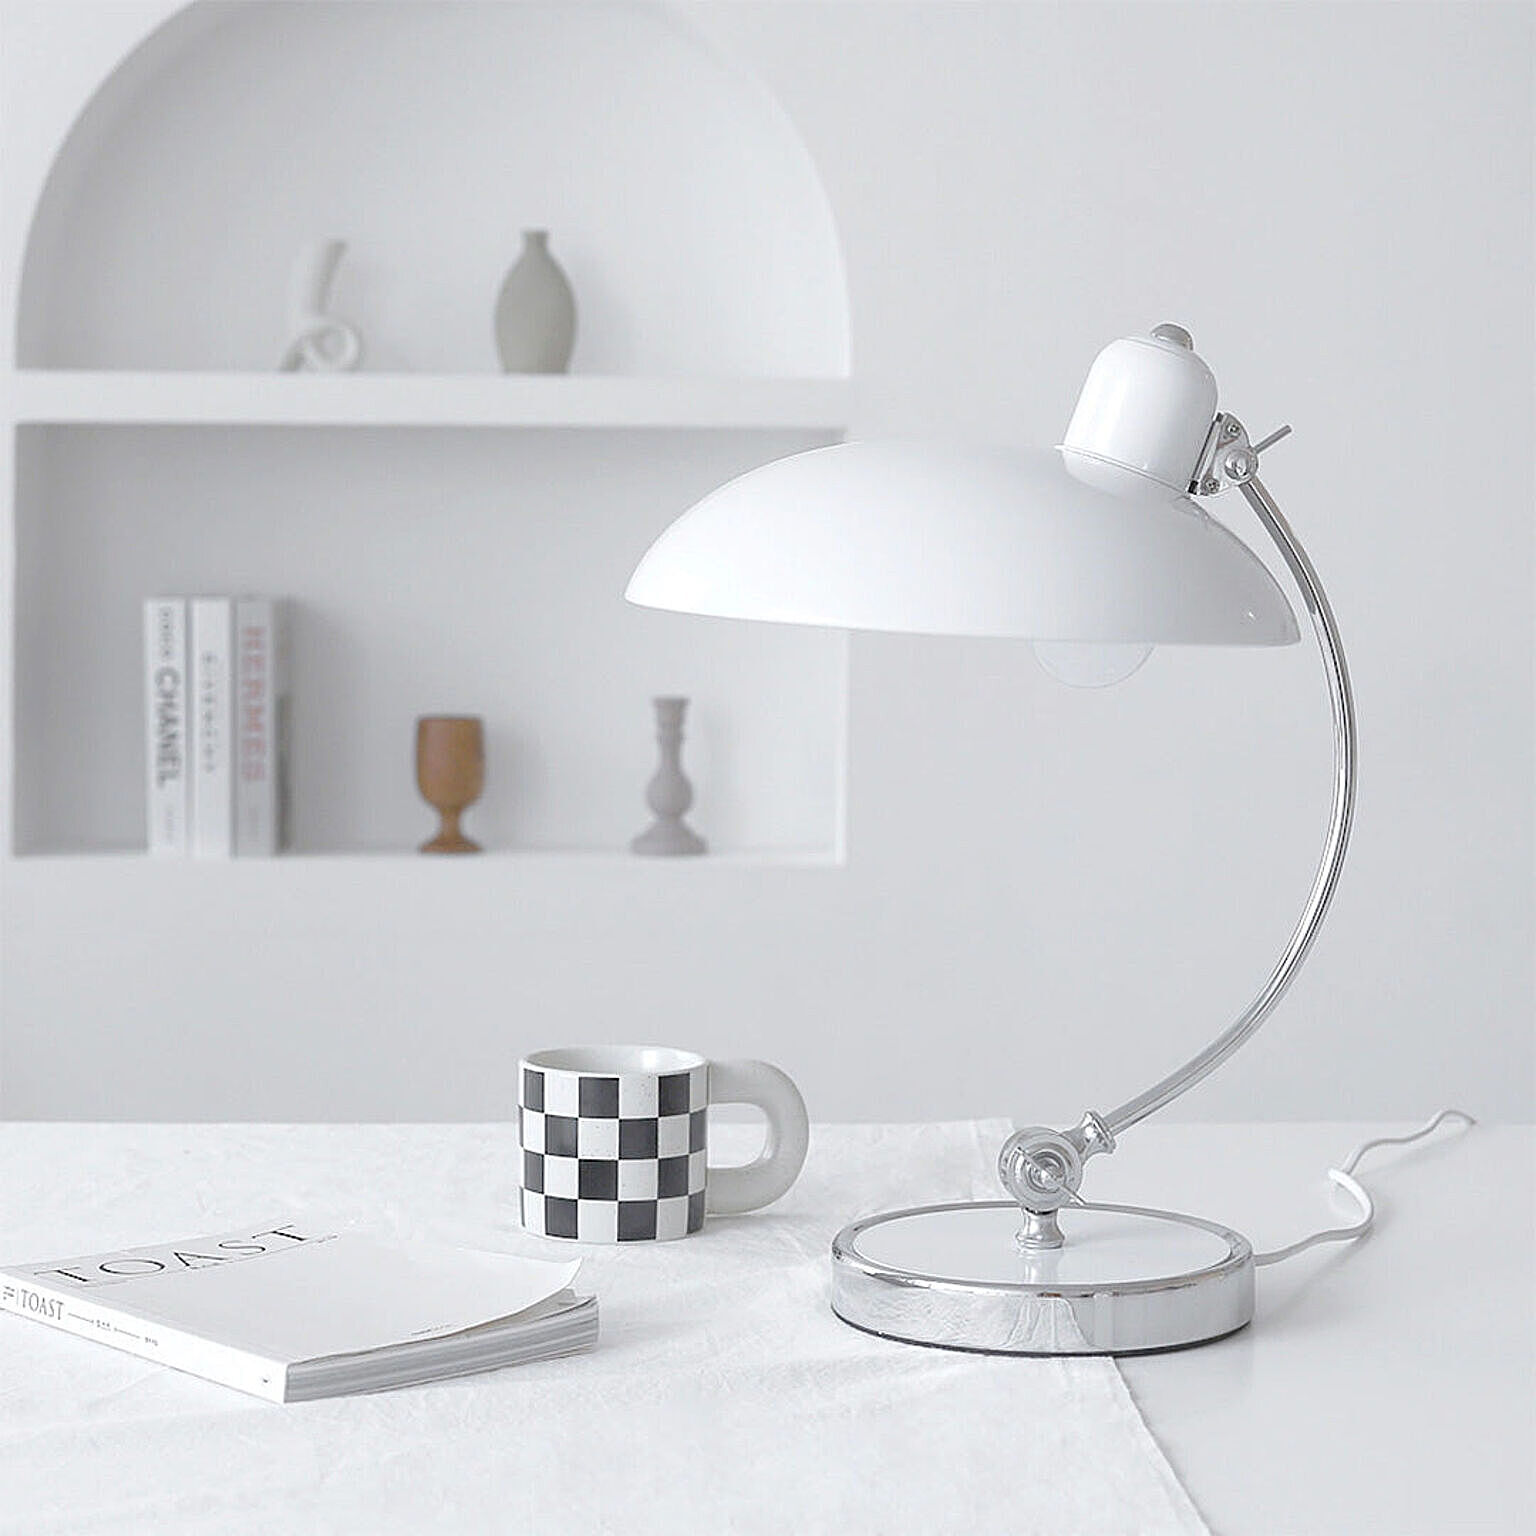 【Bauhaus Japan】Bauhaus desk lamp/デスクランプ/テーブルランプ/リビング照明/寝室照明/デスク照明